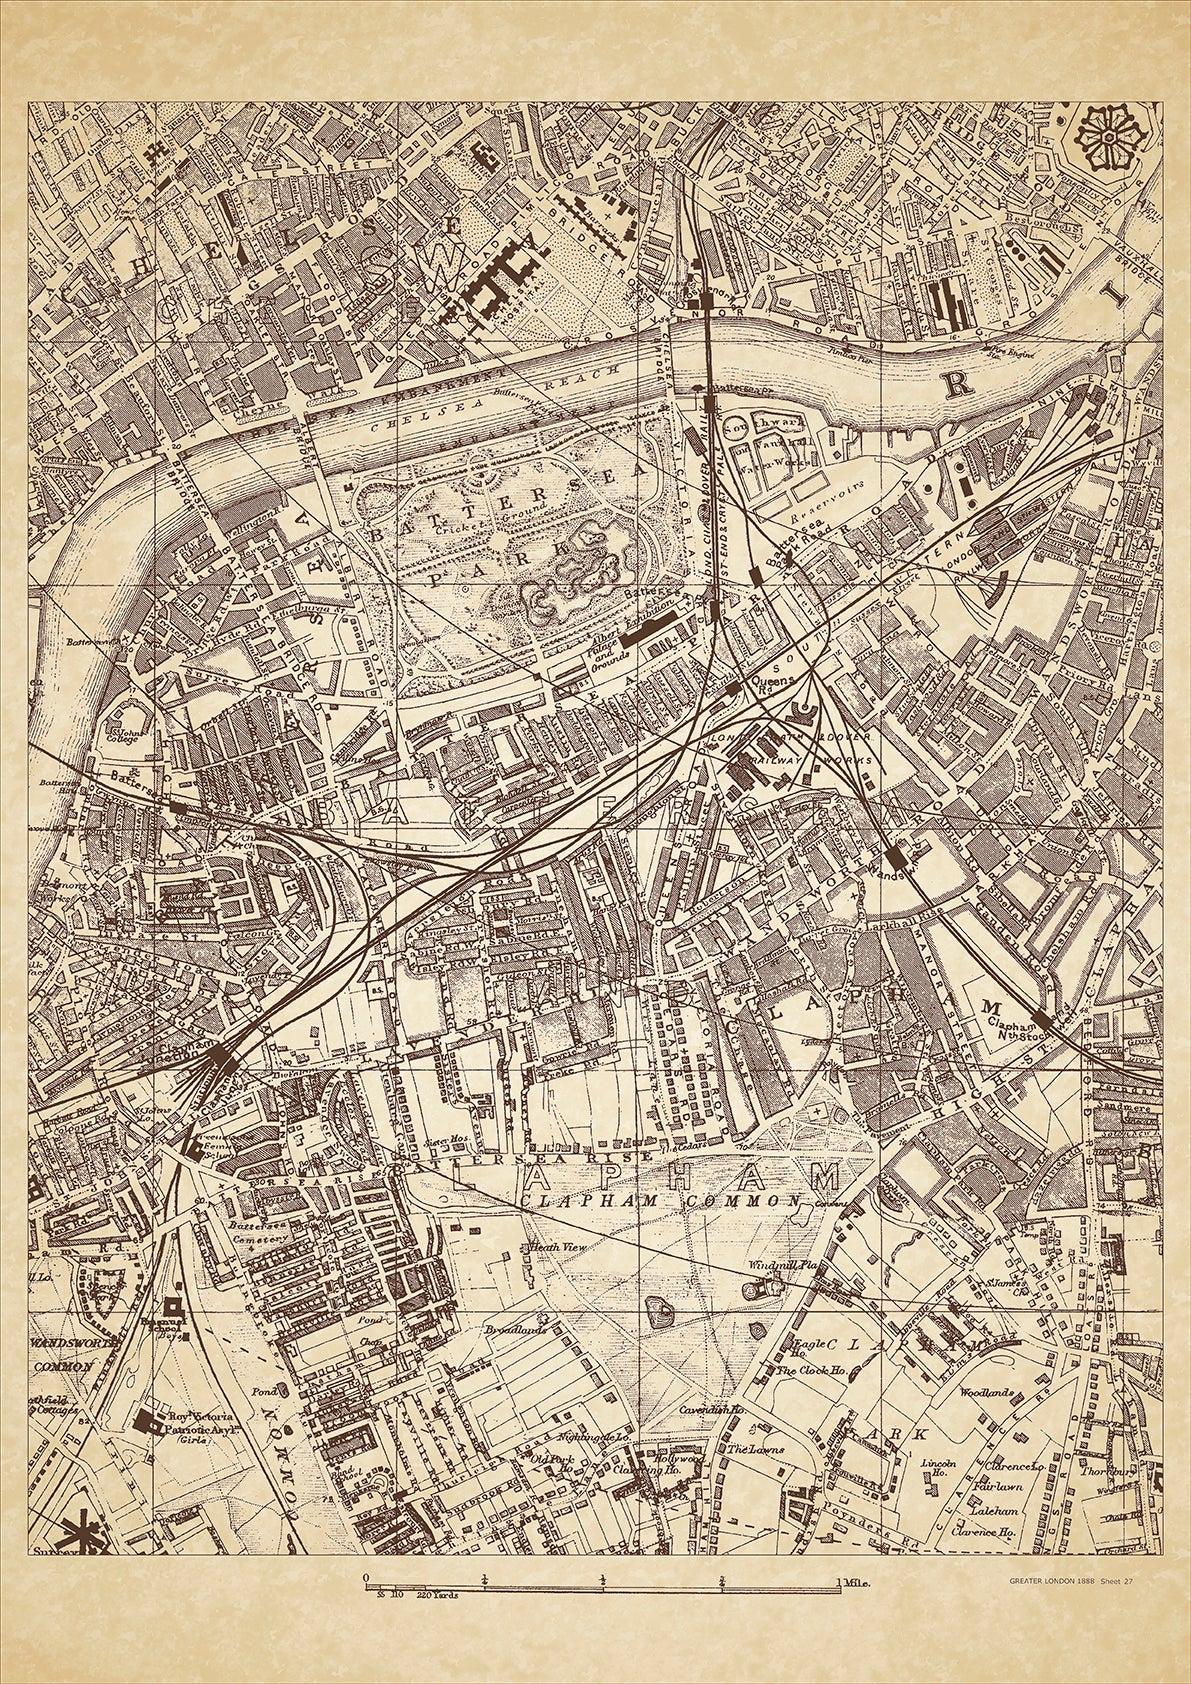 Greater London in 1888 Series - showing Battersea, Clapham, Chelsea - sheet 27